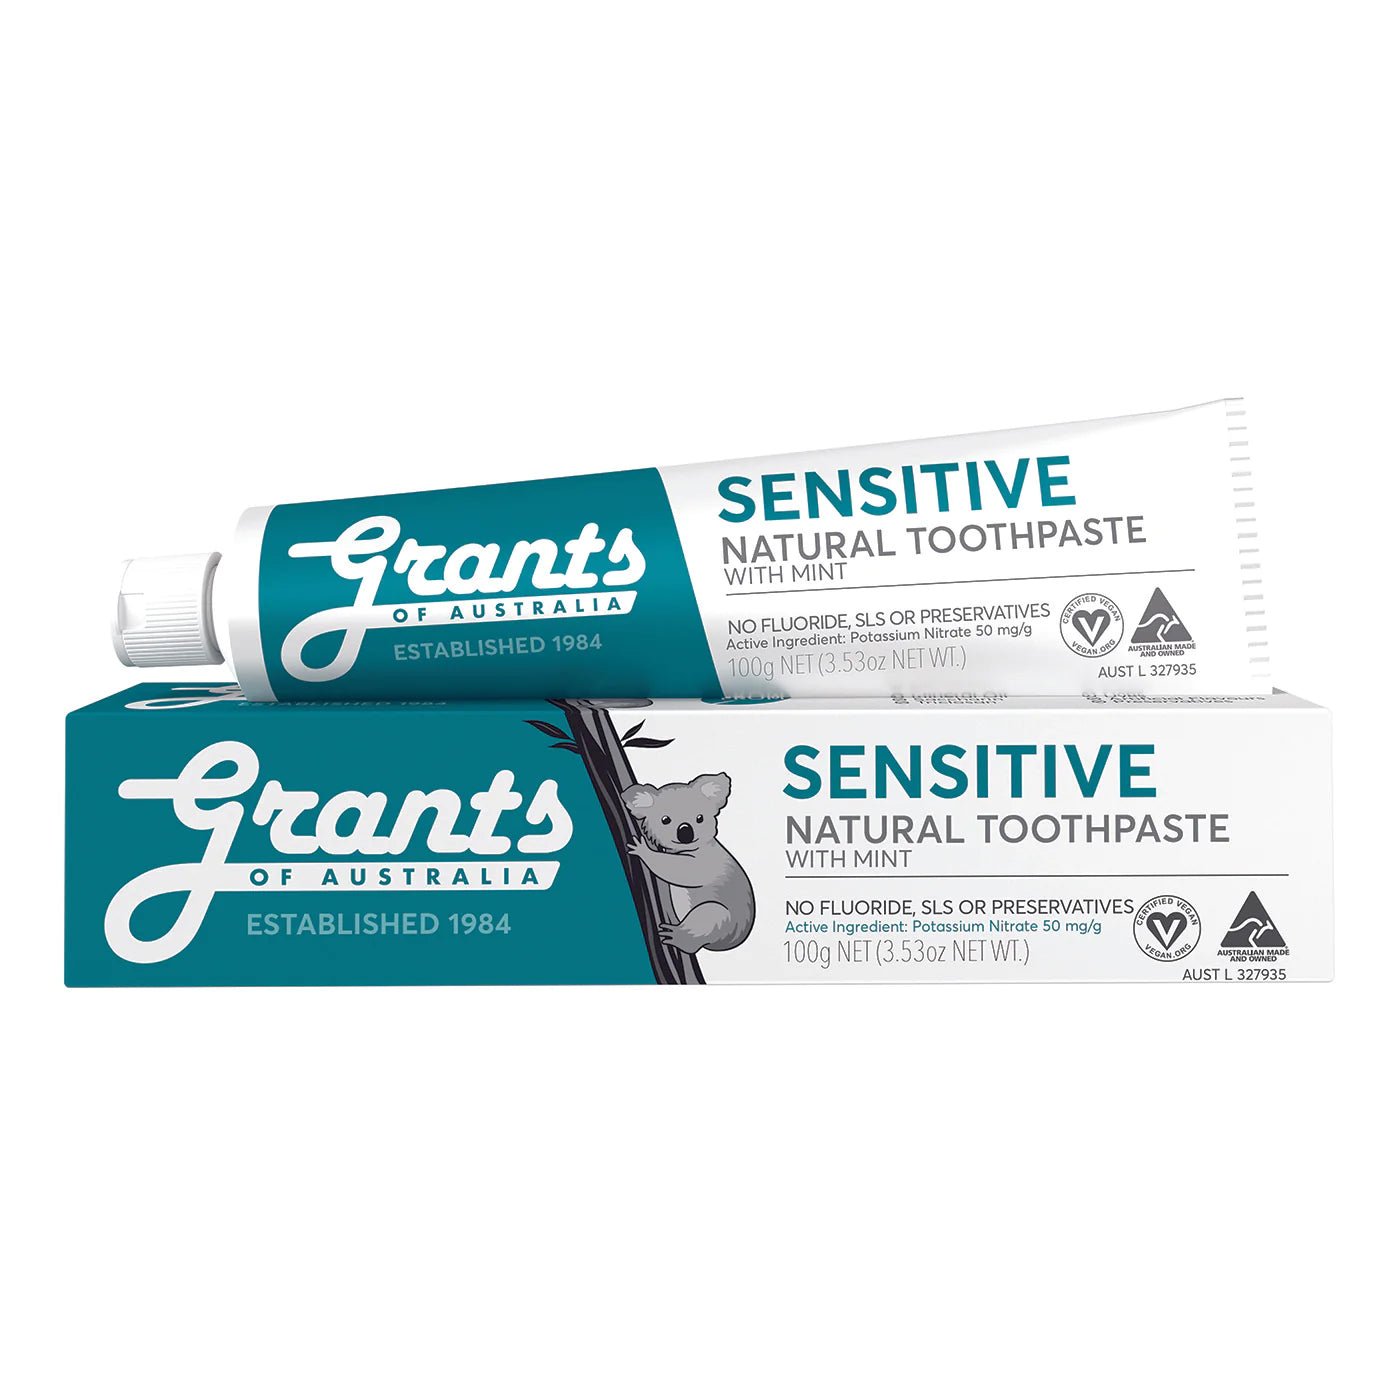 Sensitive Natural Toothpaste - Fluoride Free - 100g - #shop_name - Fluoride free - -Prana Wholefoods